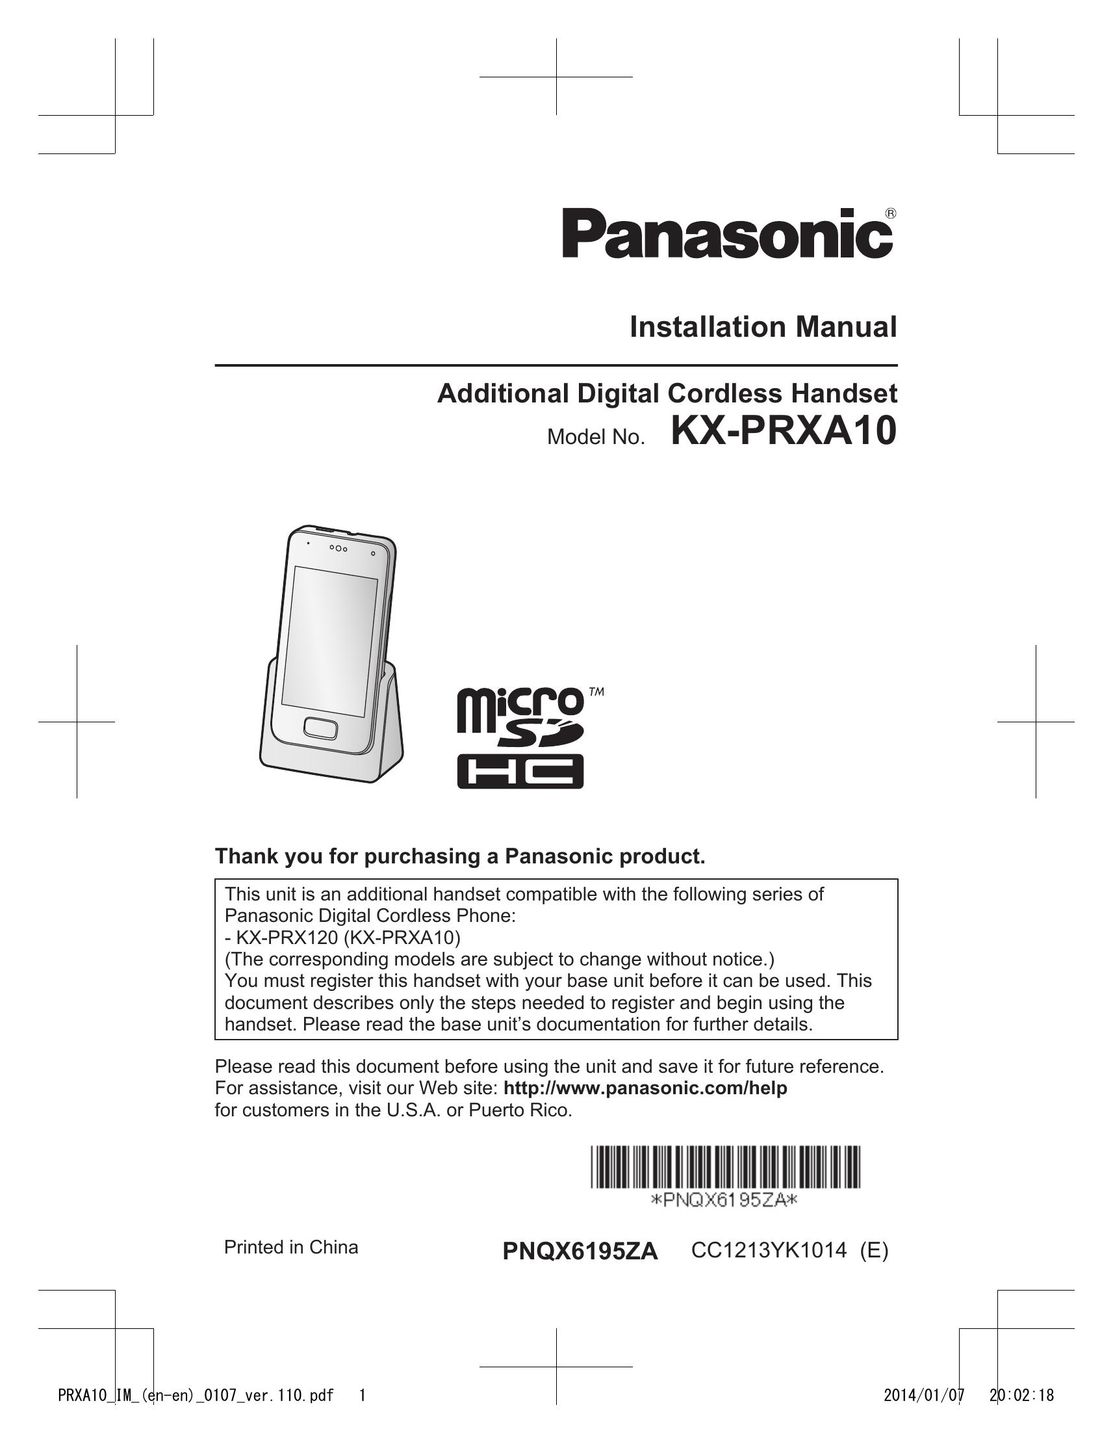 Panasonic KX-PRXA10 Cordless Telephone User Manual